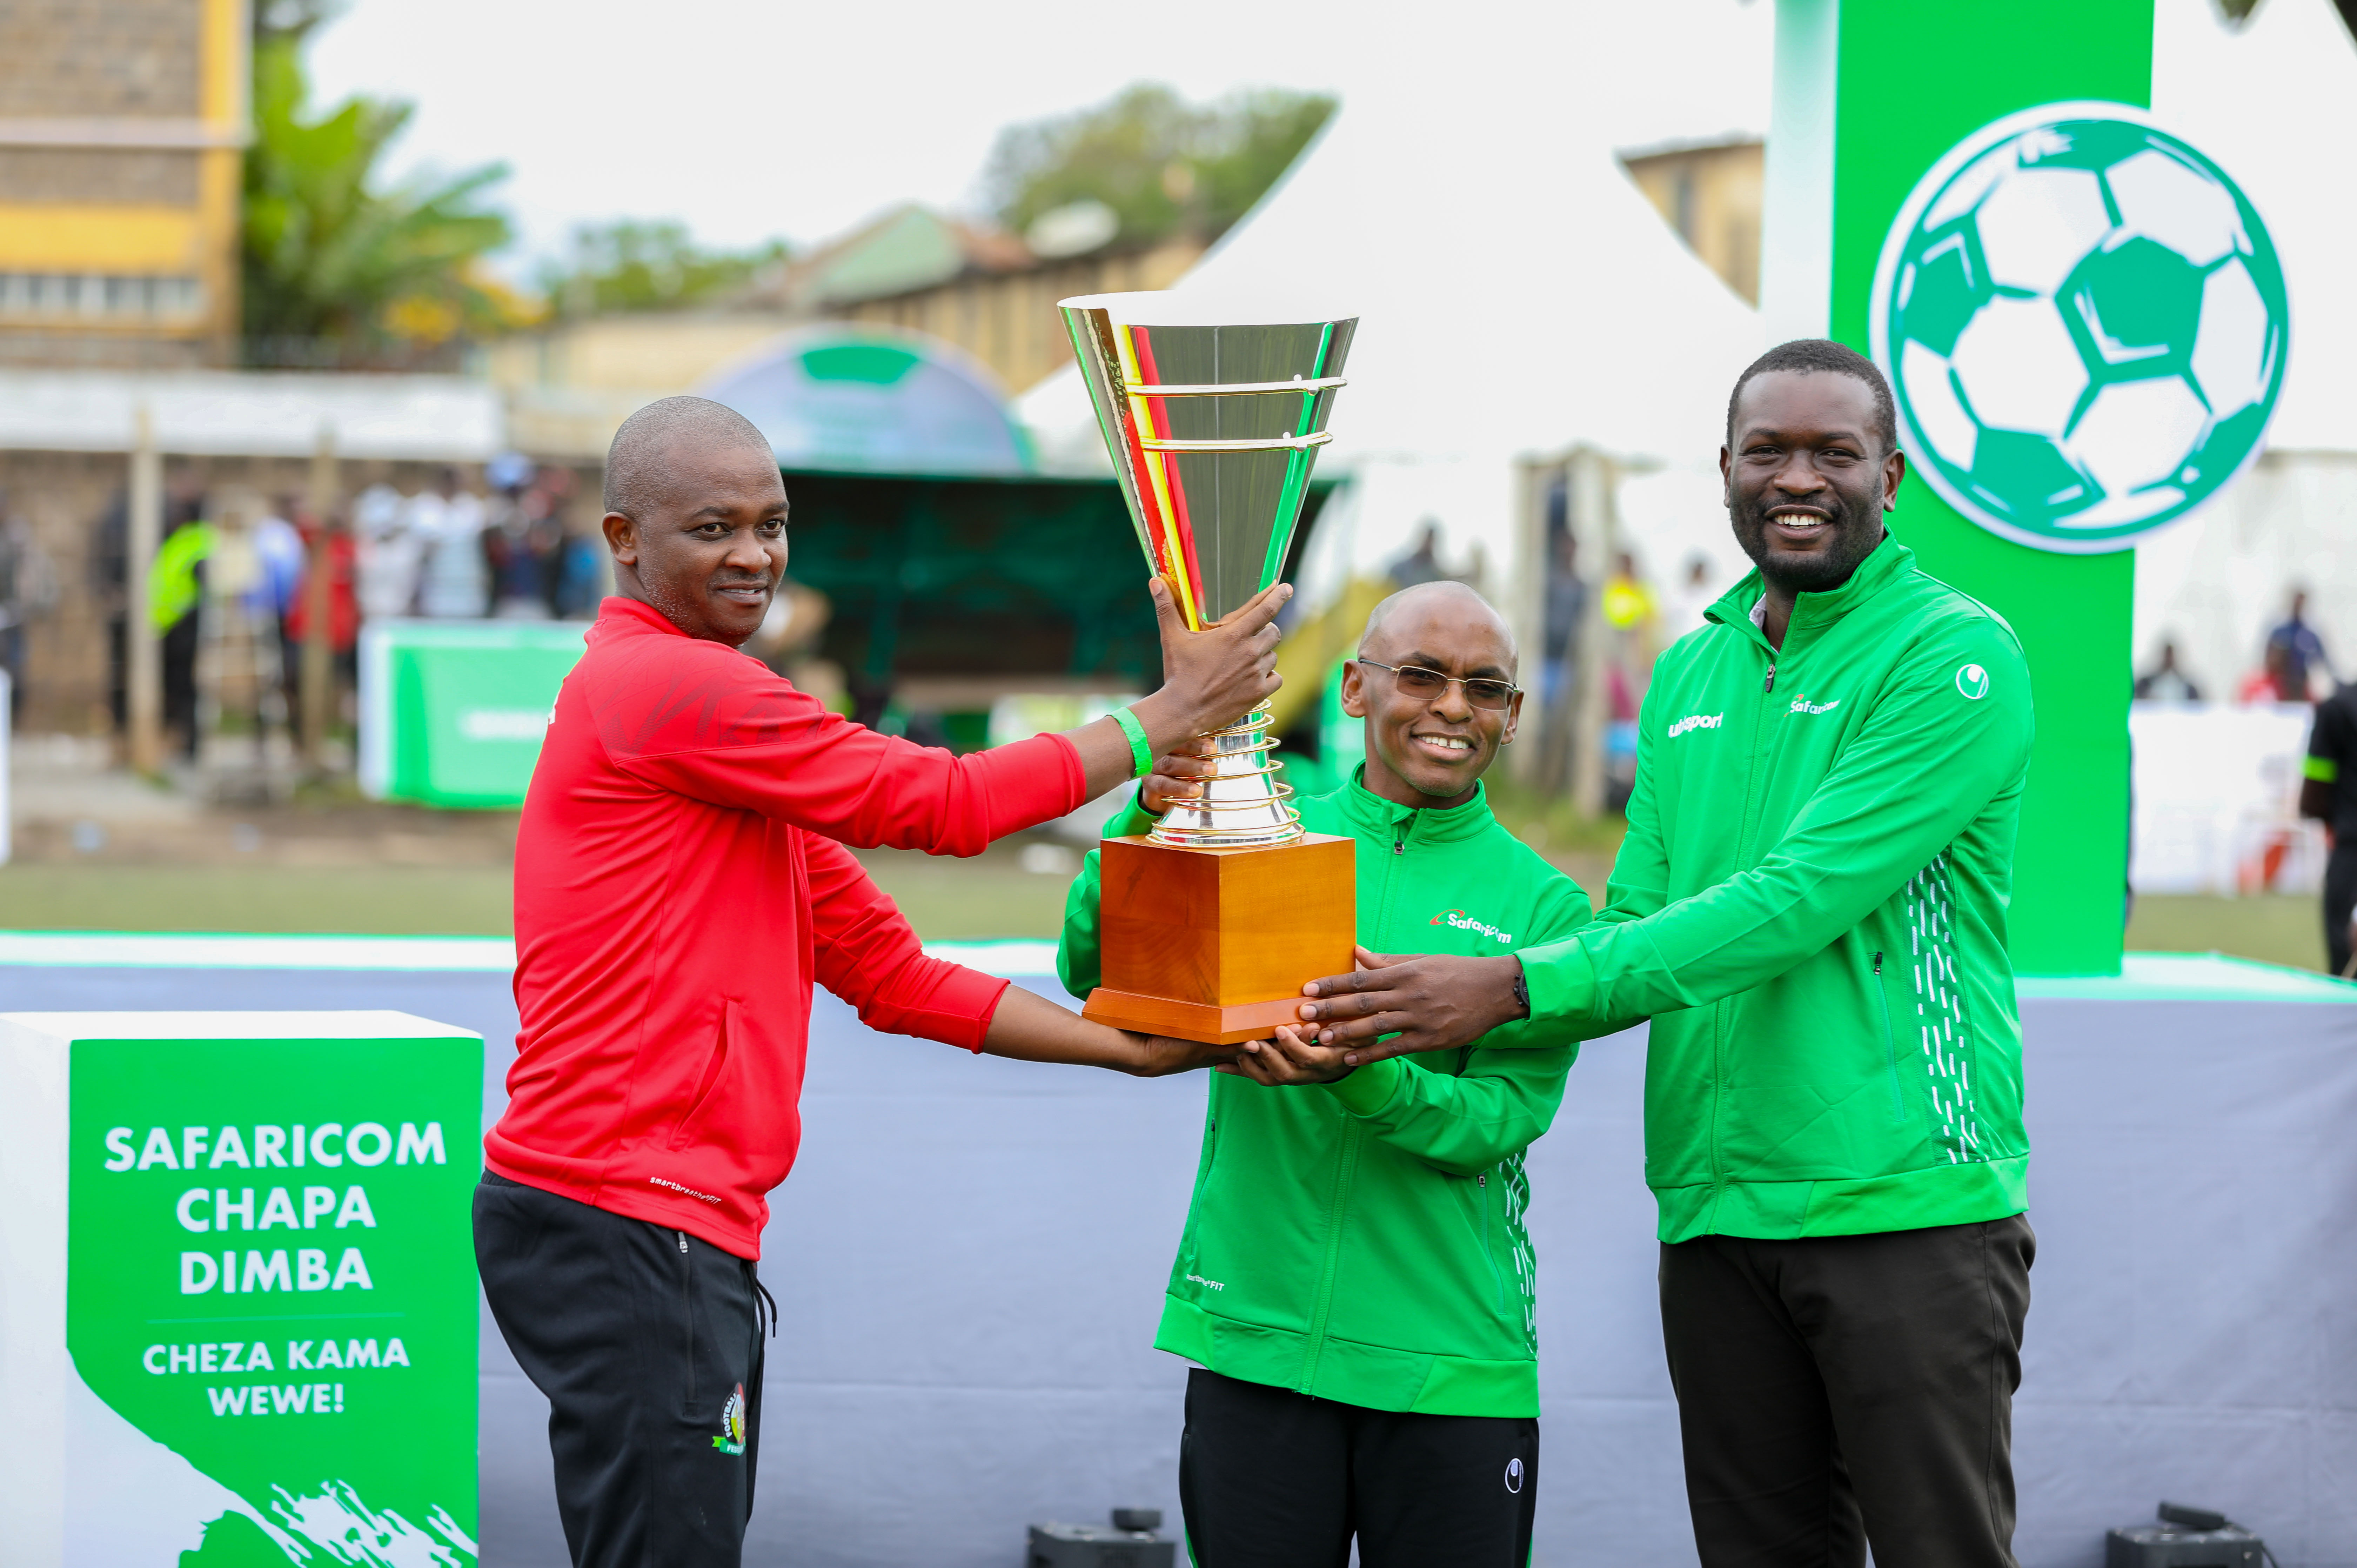 FKF President Nick Mwendwa (L), Safaricom CEO Peter Ndegwa (c), and Nairobi Senator Edwin Sifuna(R) lift the Safaricom Chapa Dimba season 4 trophy during the official launch.